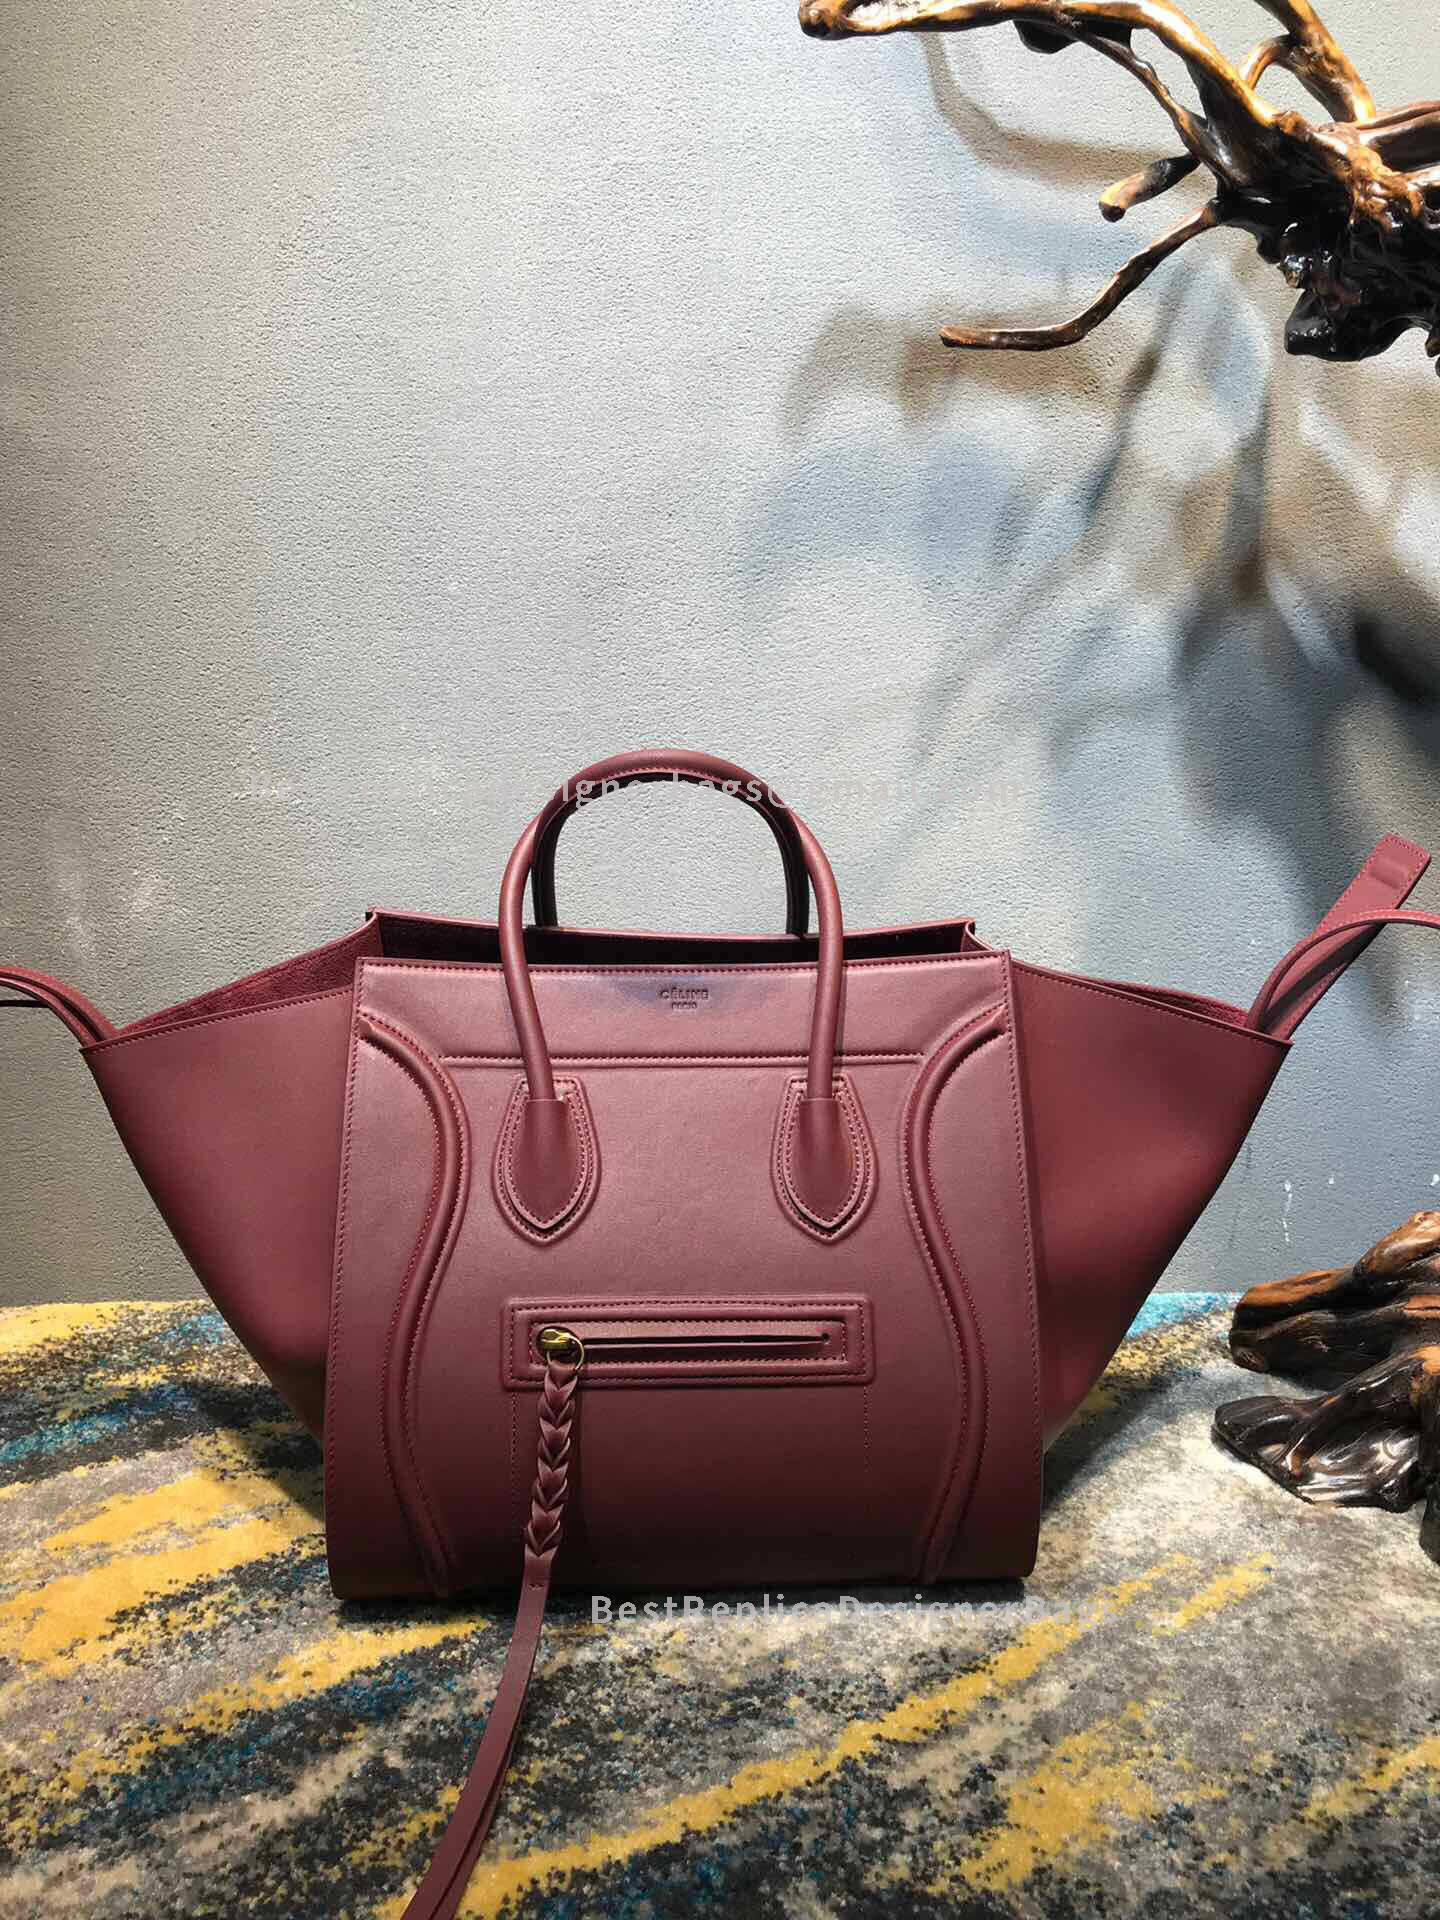 Celine Luggage Phantom Bag In Burgundy Smooth Leather